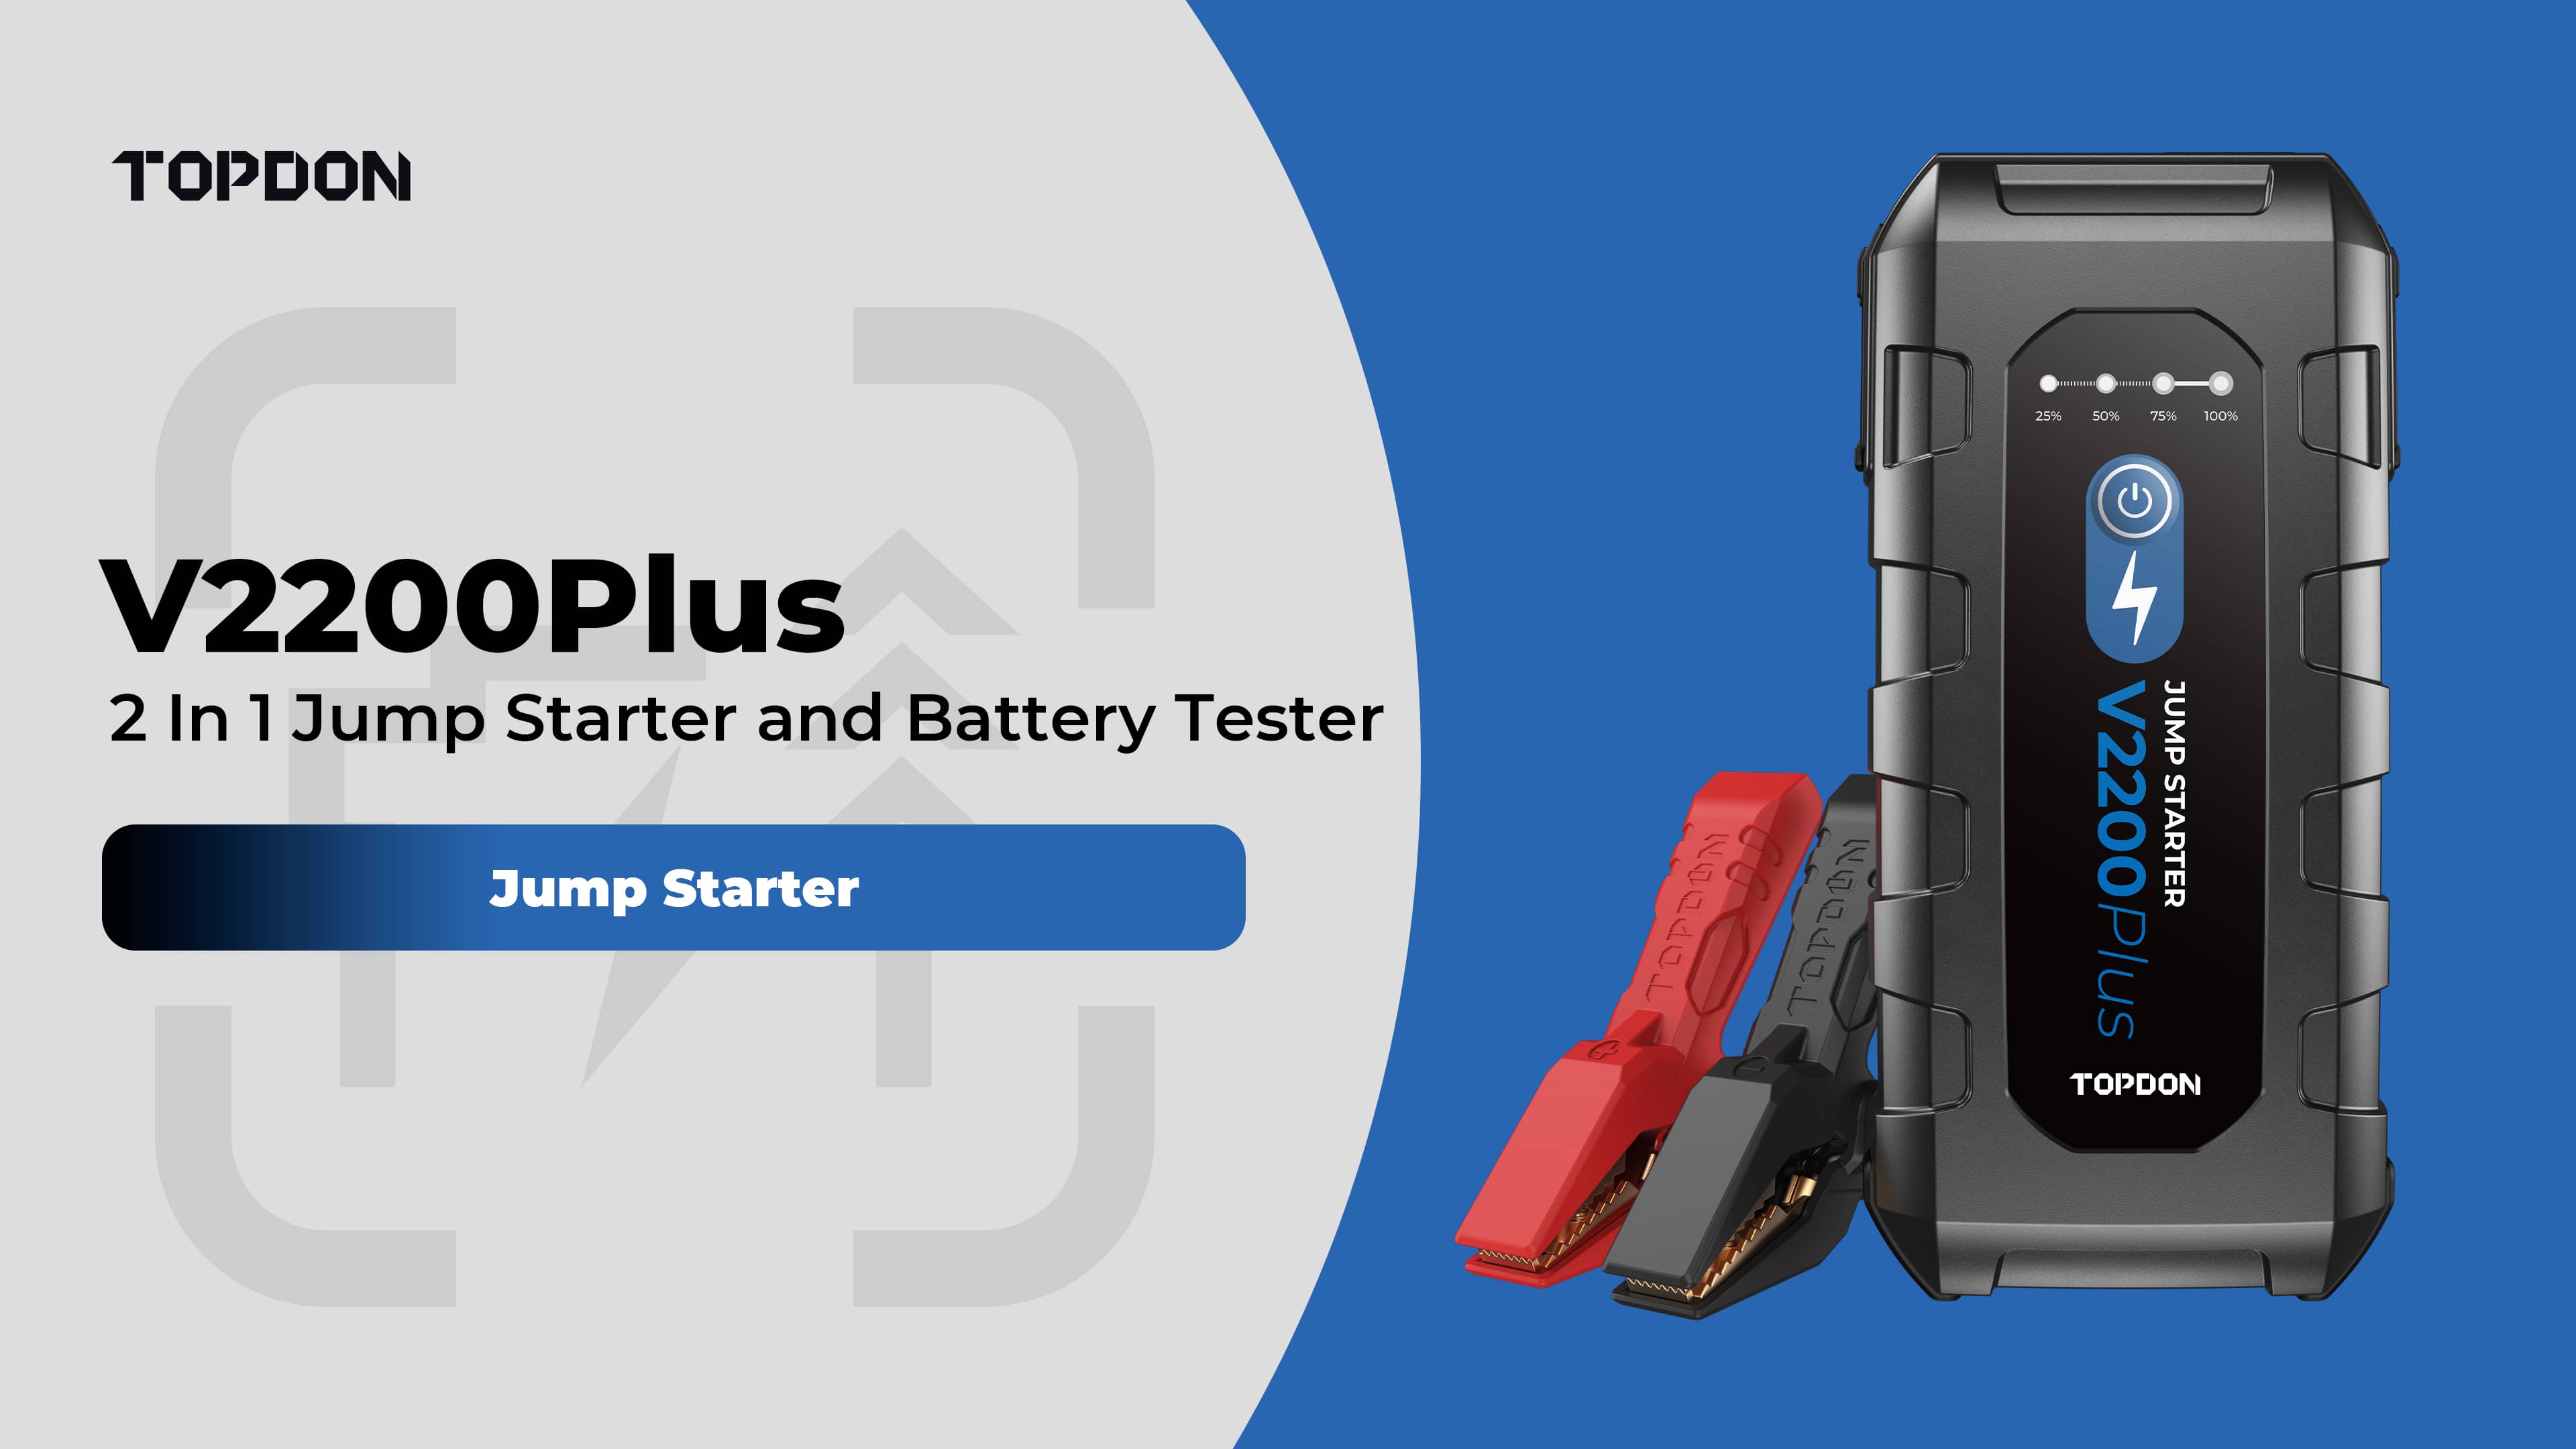 TOPDON V2200Plus | 2 In 1 Jump Starter and Battery Tester